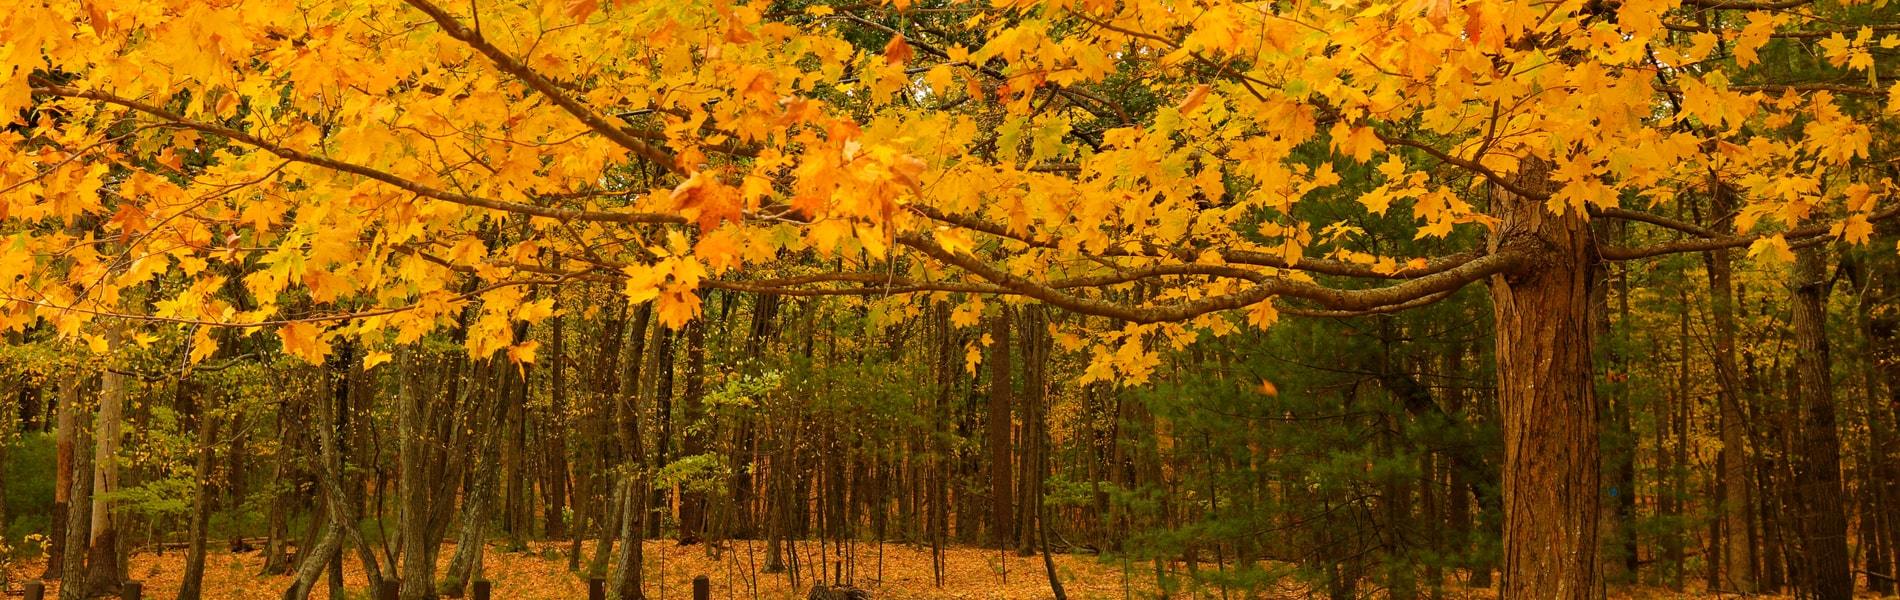 Fall foliage in Walden Ponds GA